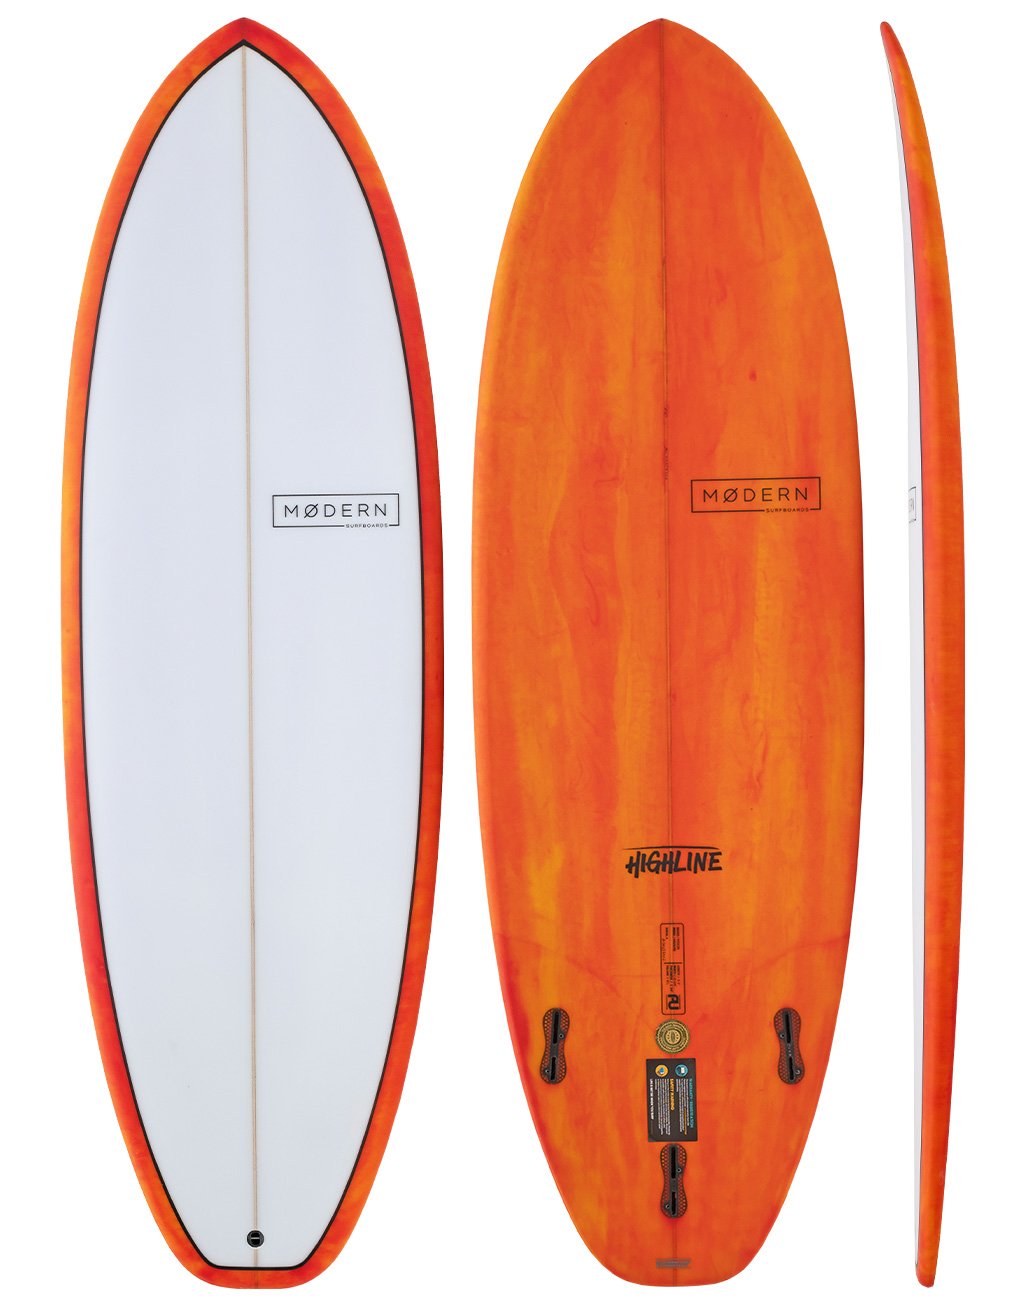 Modern Surfboards - Highline - orange and white shotrboard